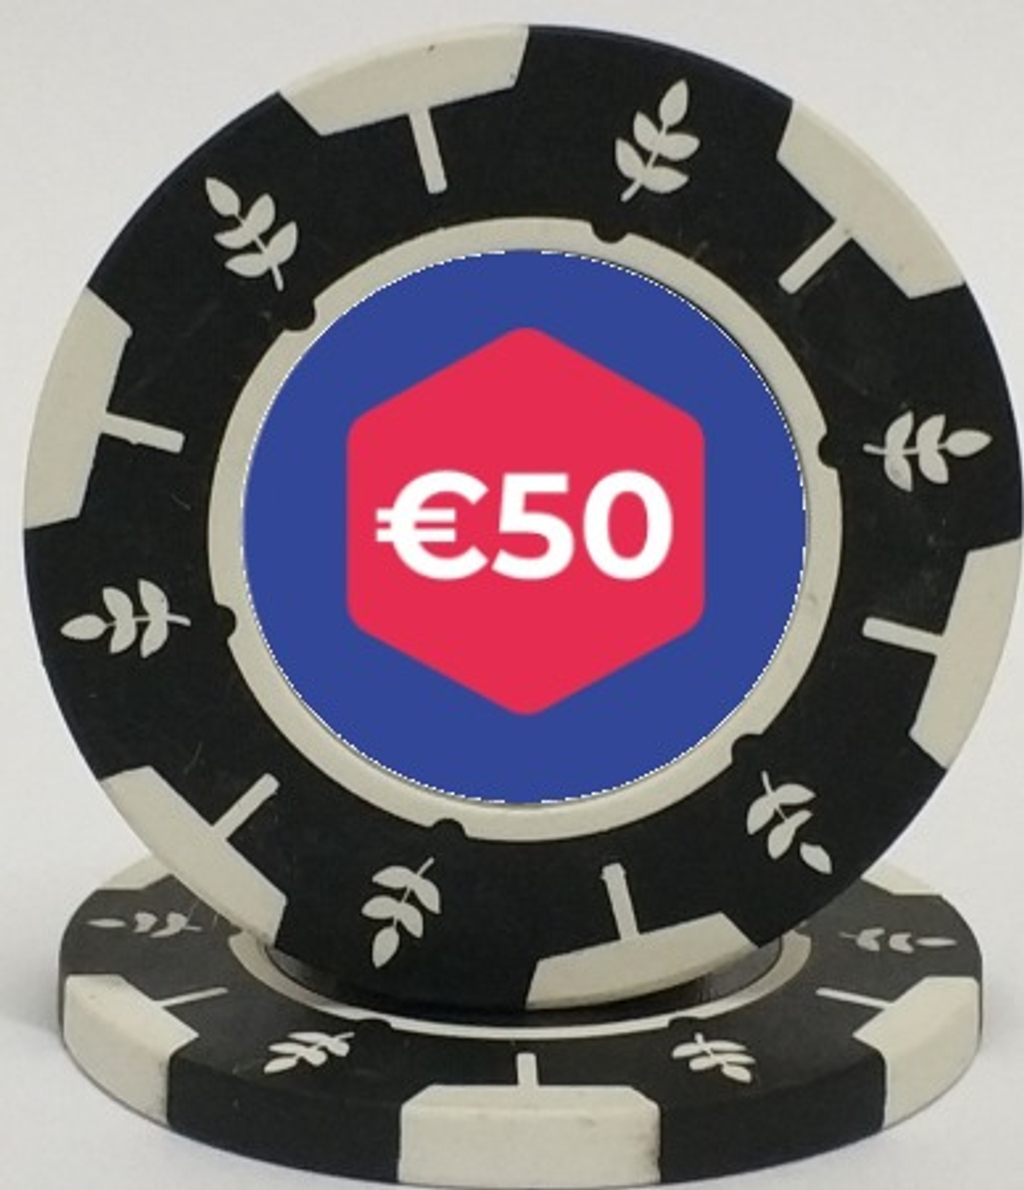 Pokerset Chip of 50 Euros. Affordable rental with BIYU.